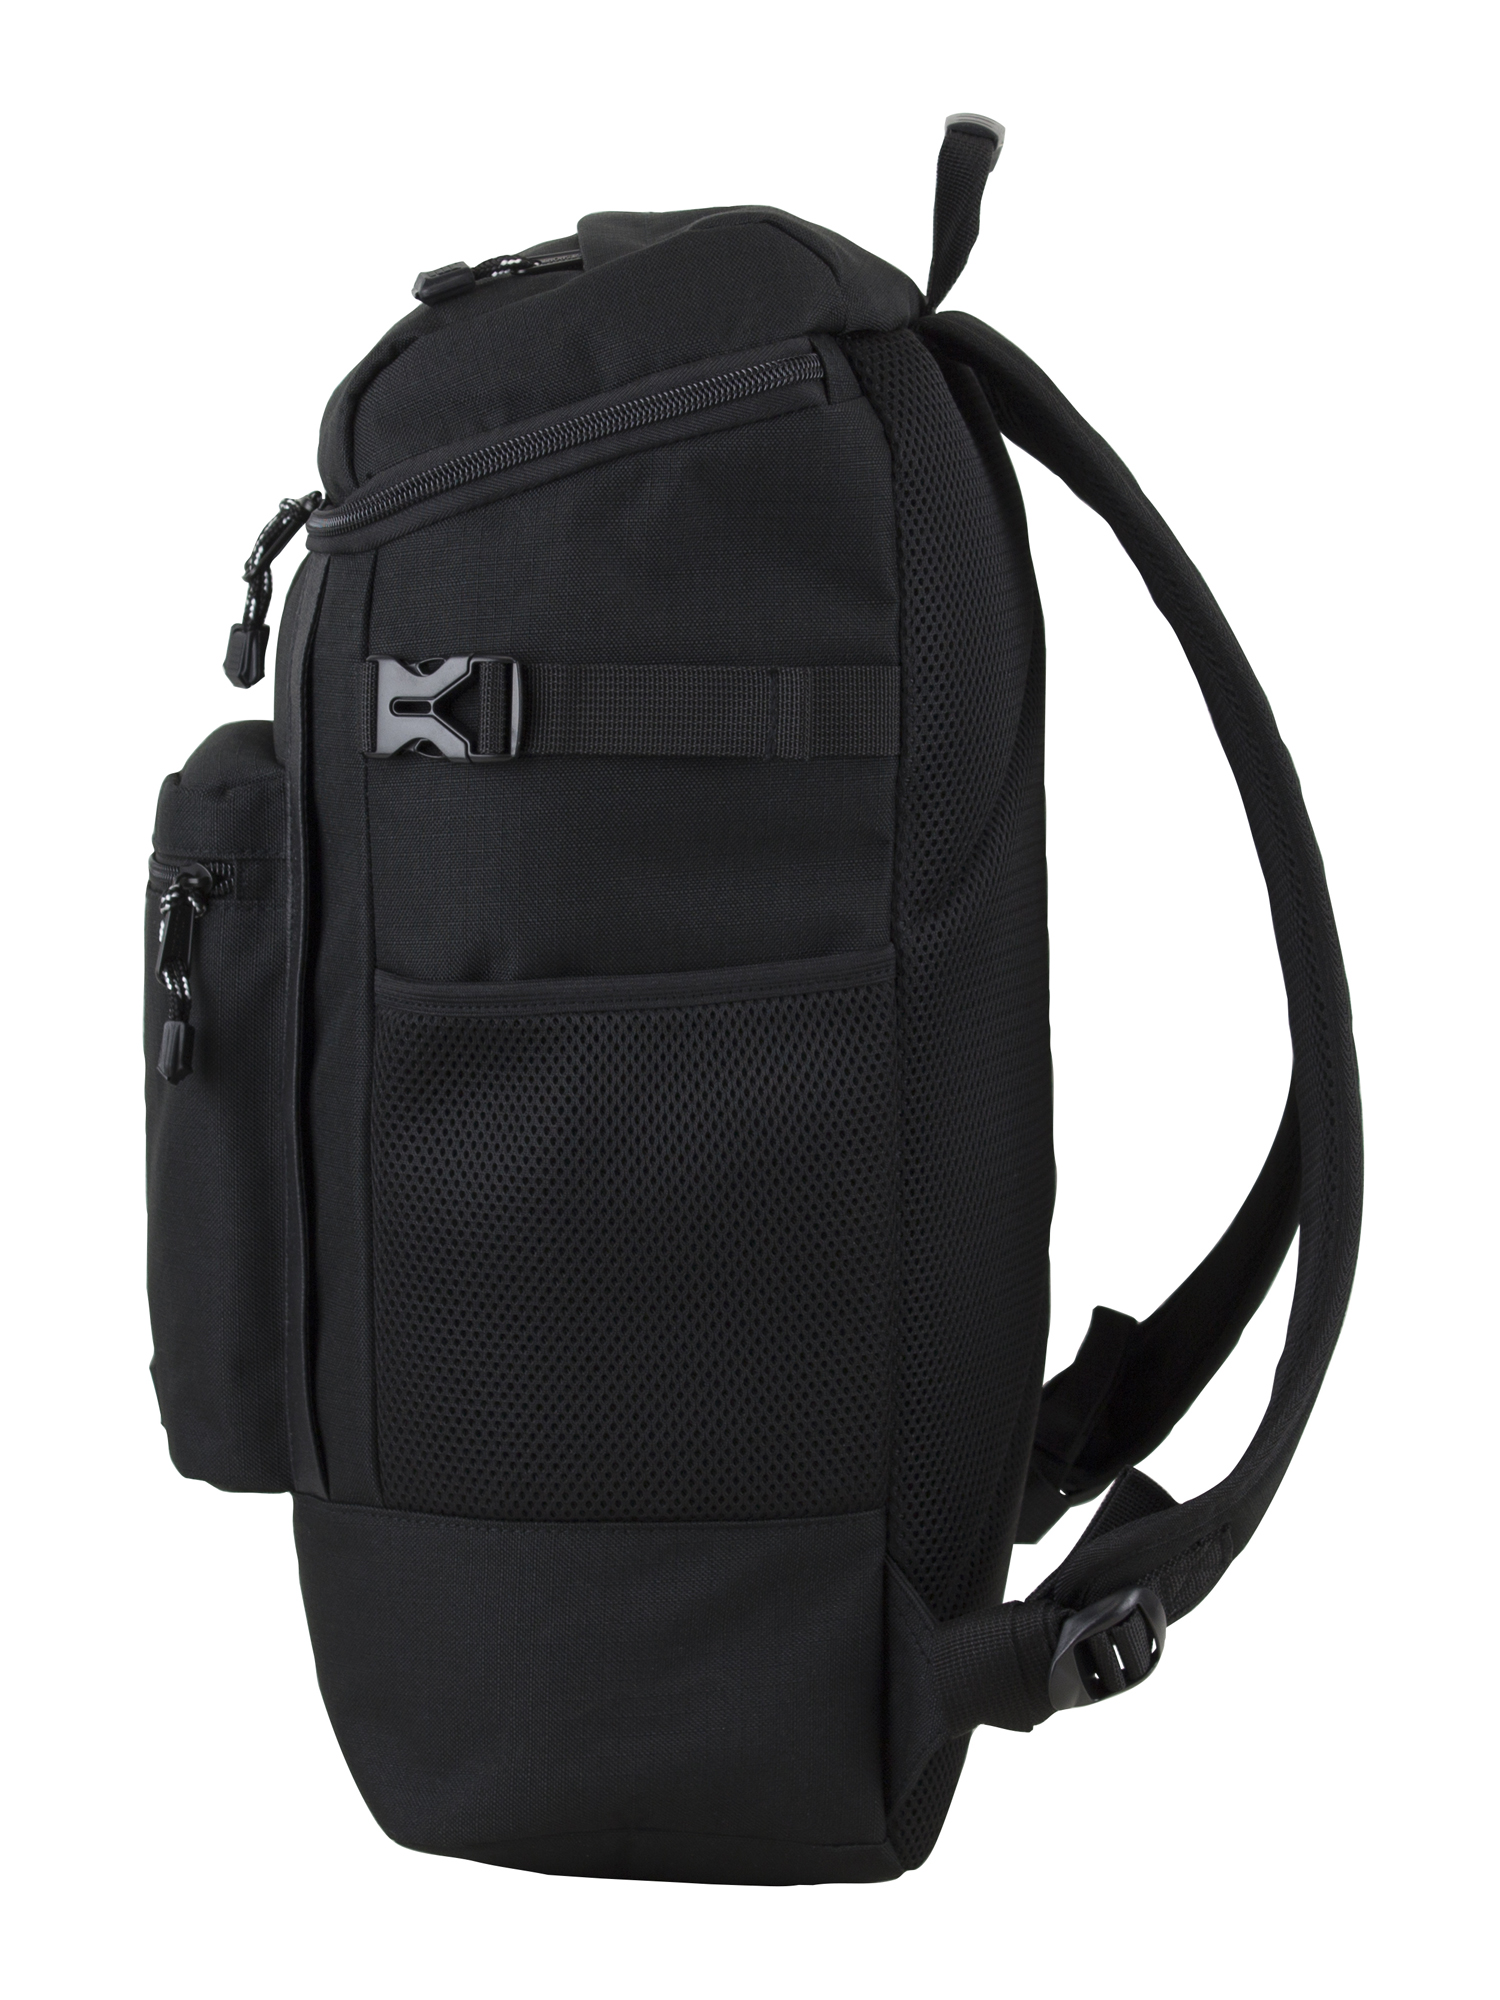 Eastsport Unisex Rival 18.5" Laptop Backpack, Black - image 5 of 9